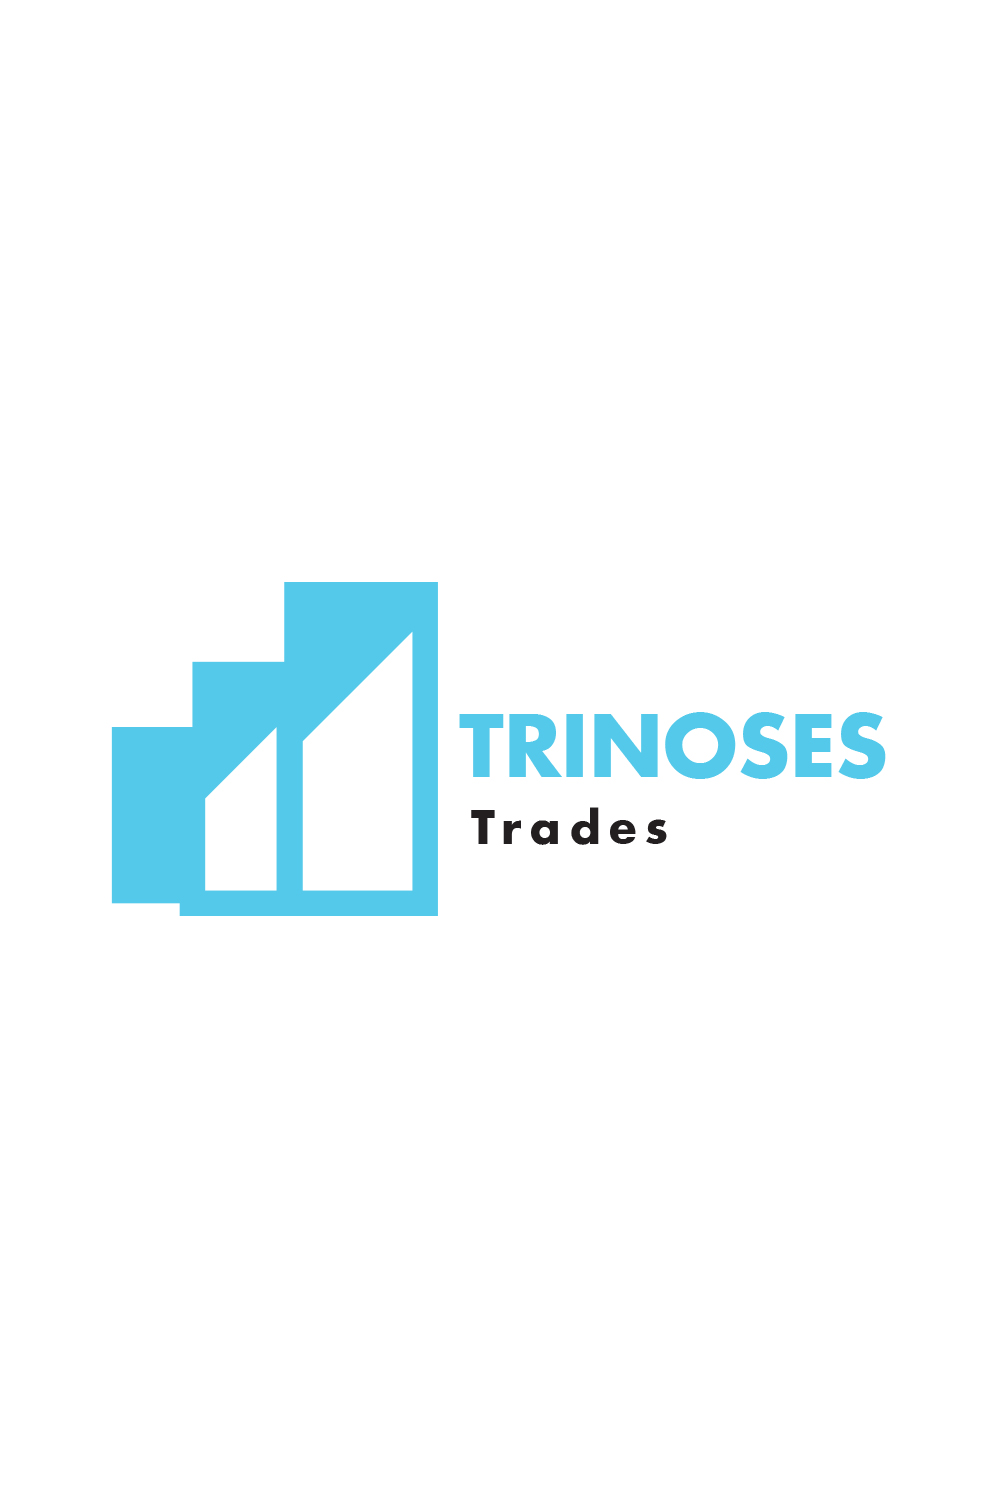 Trade market logo design pinterest preview image.